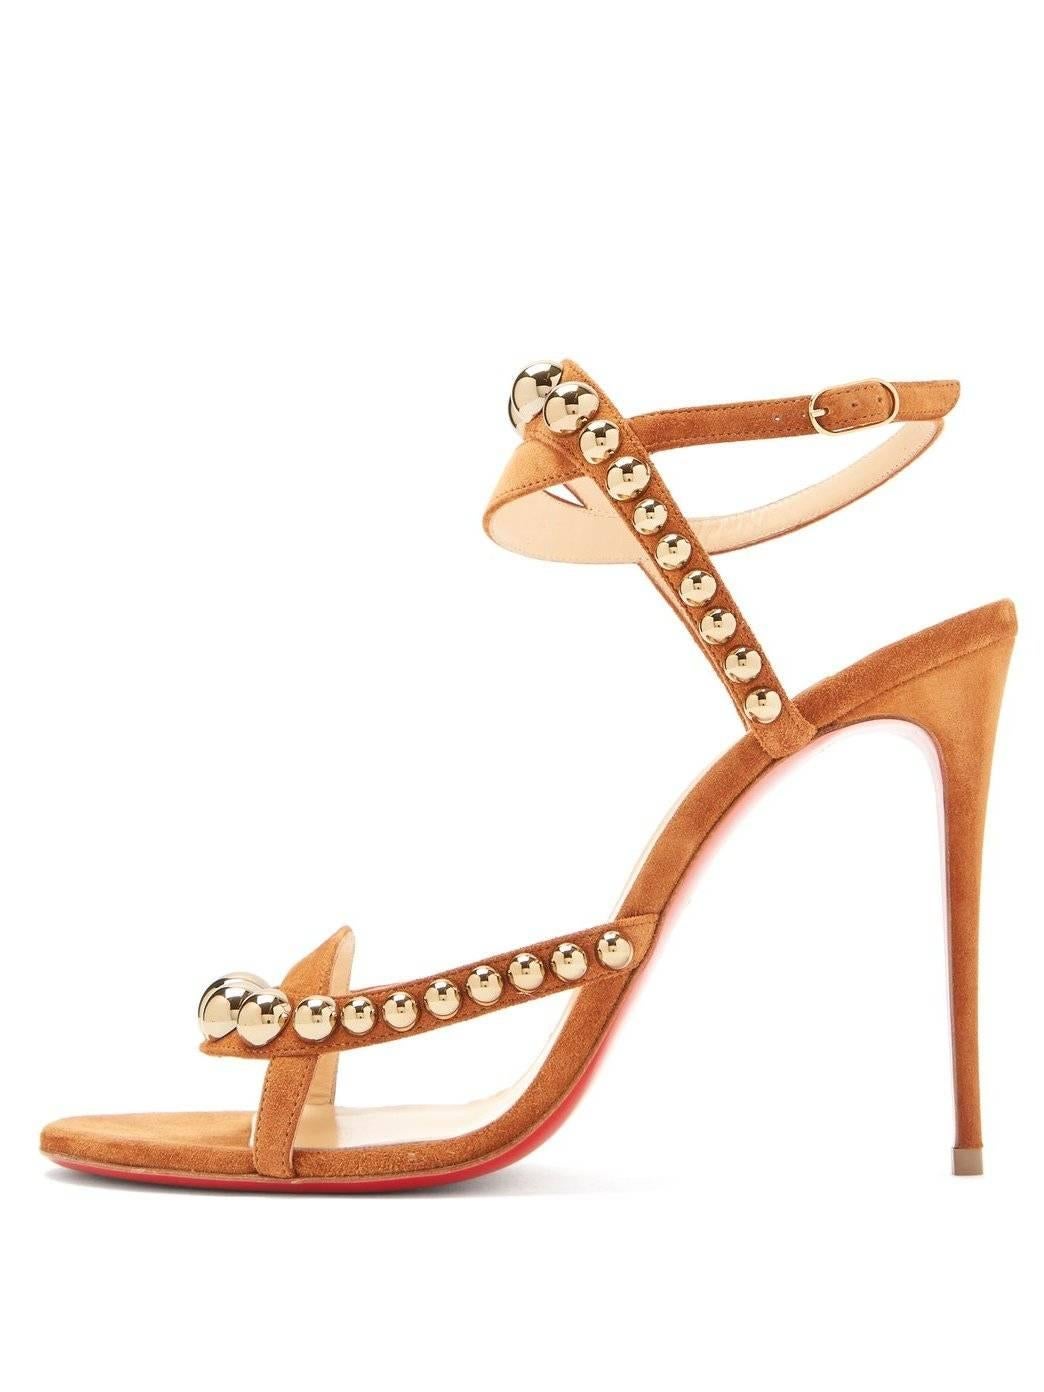 Women's Christian Louboutin New Cognac Suede Gold Stud Evening Sandals Heels 